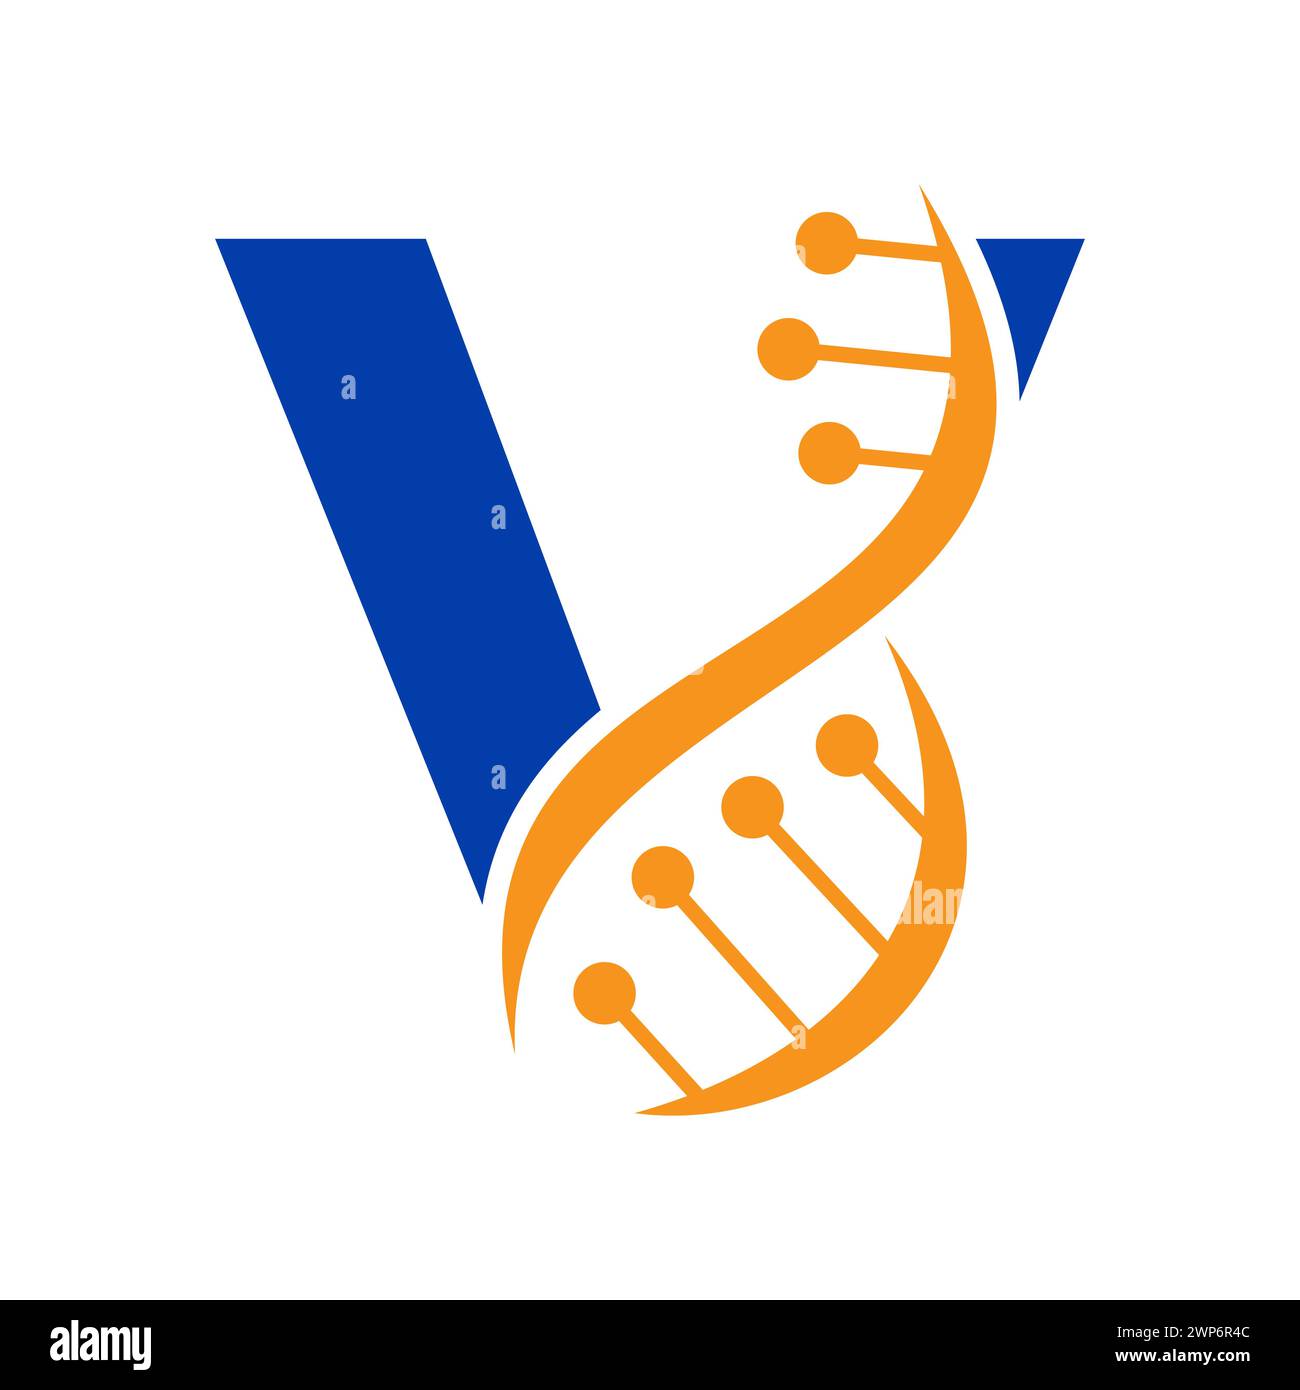 Ursprüngliches DNA-Logo auf Buchstabe V Vektorvorlage für Gesundheitssymbol Stock Vektor